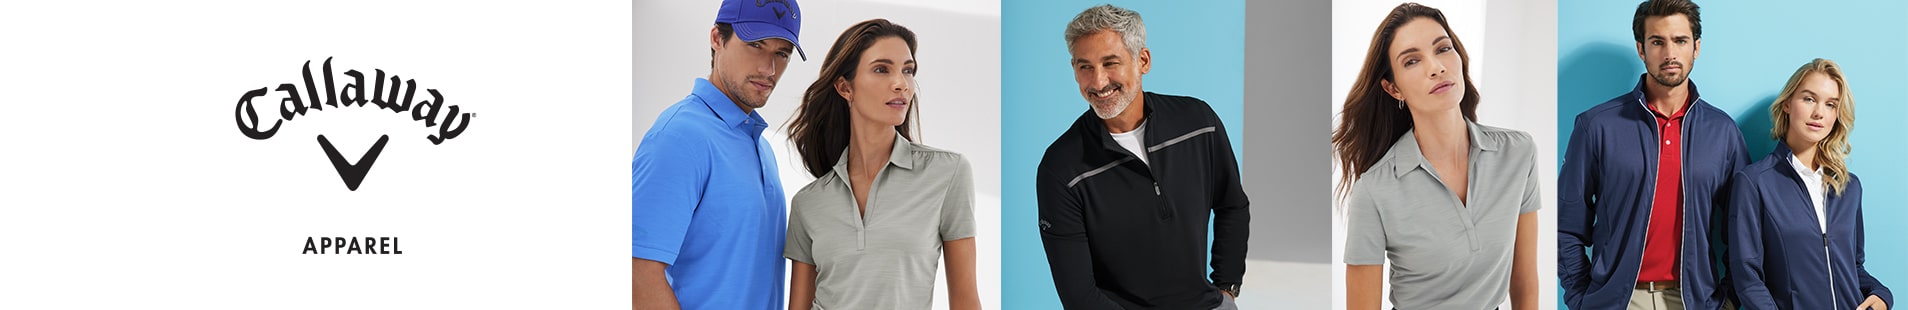 callaway golf apparel for men and women